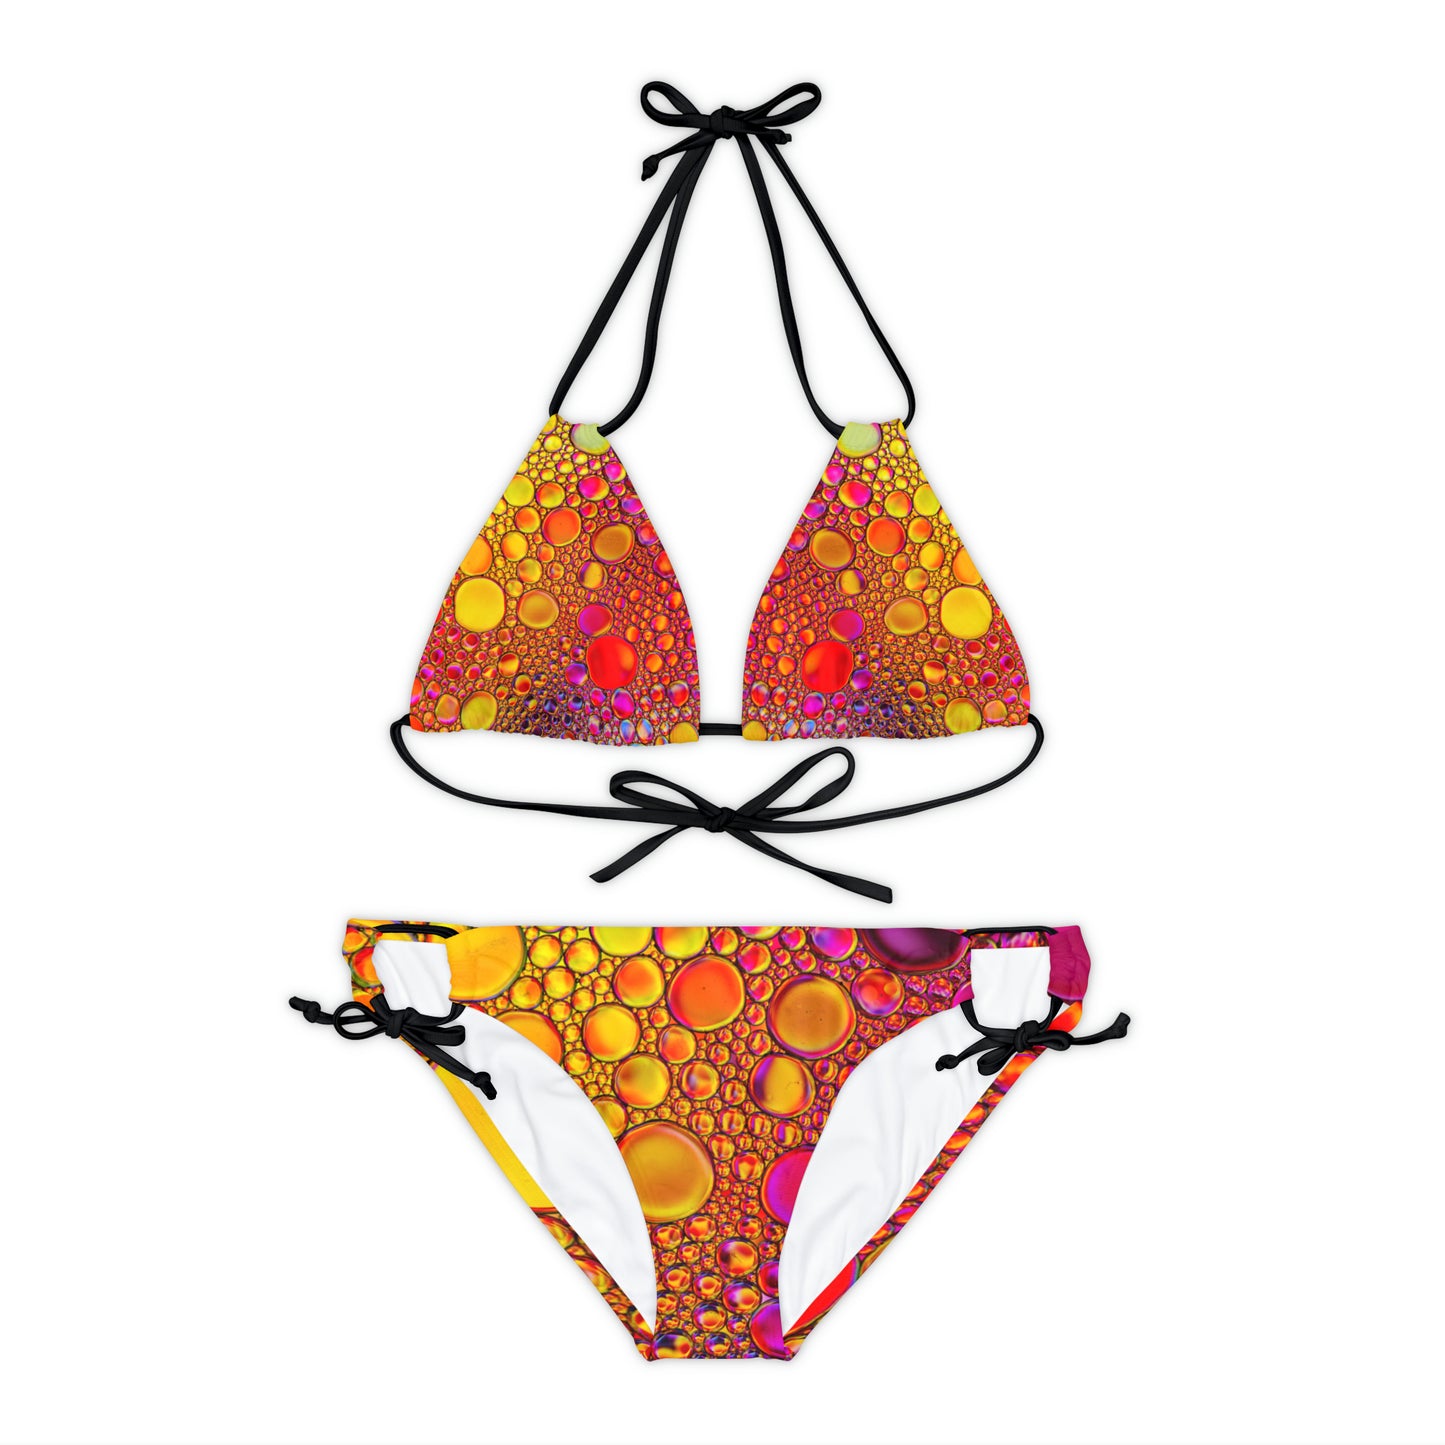 Sparkling Colors - Inovax Strappy Bikini Set